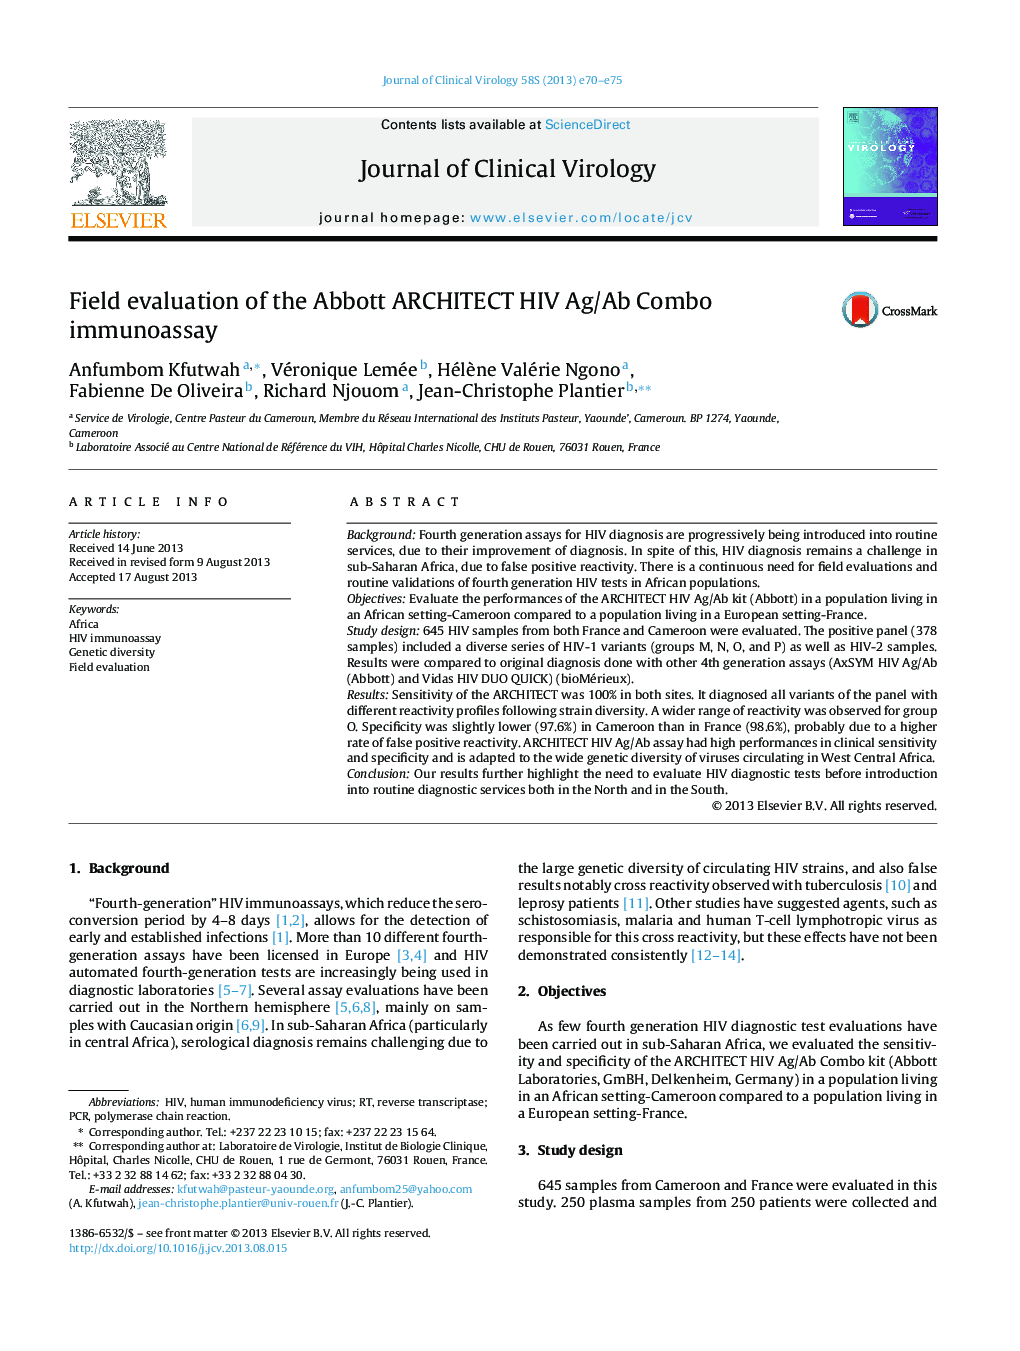 Field evaluation of the Abbott ARCHITECT HIV Ag/Ab Combo immunoassay